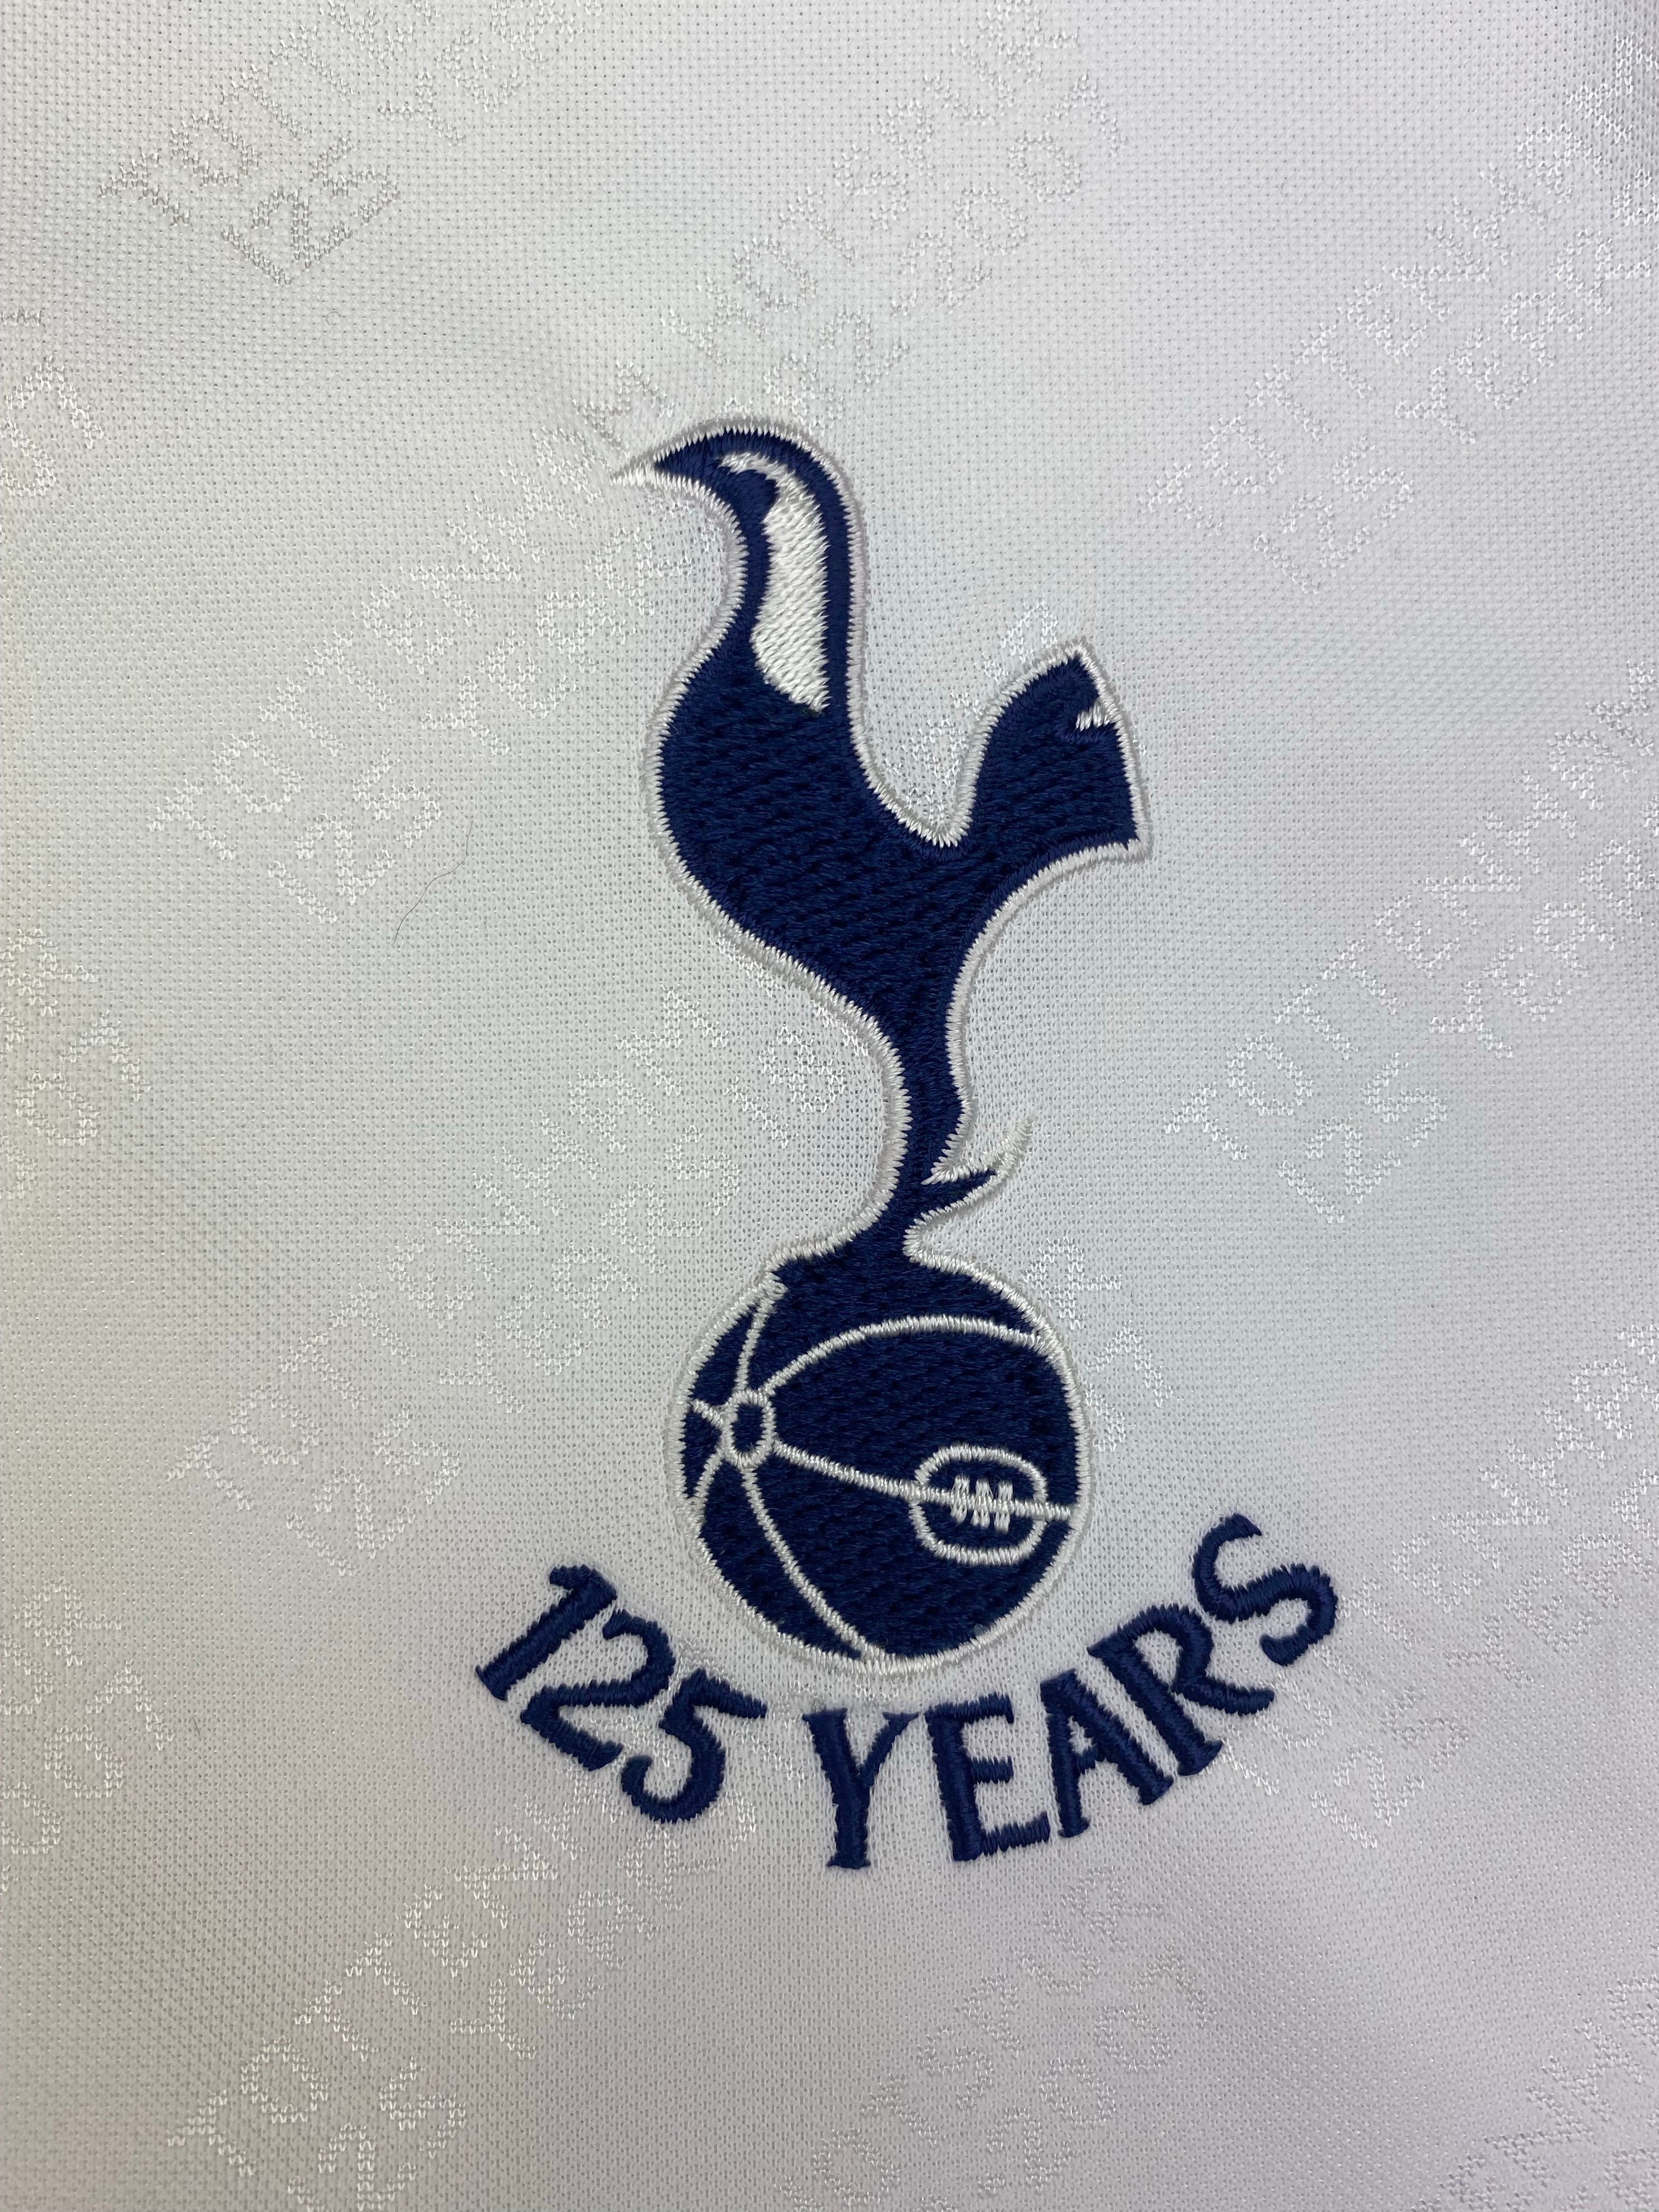 Tottenham Hotspur Home football shirt 2007 - 2008. Sponsored by